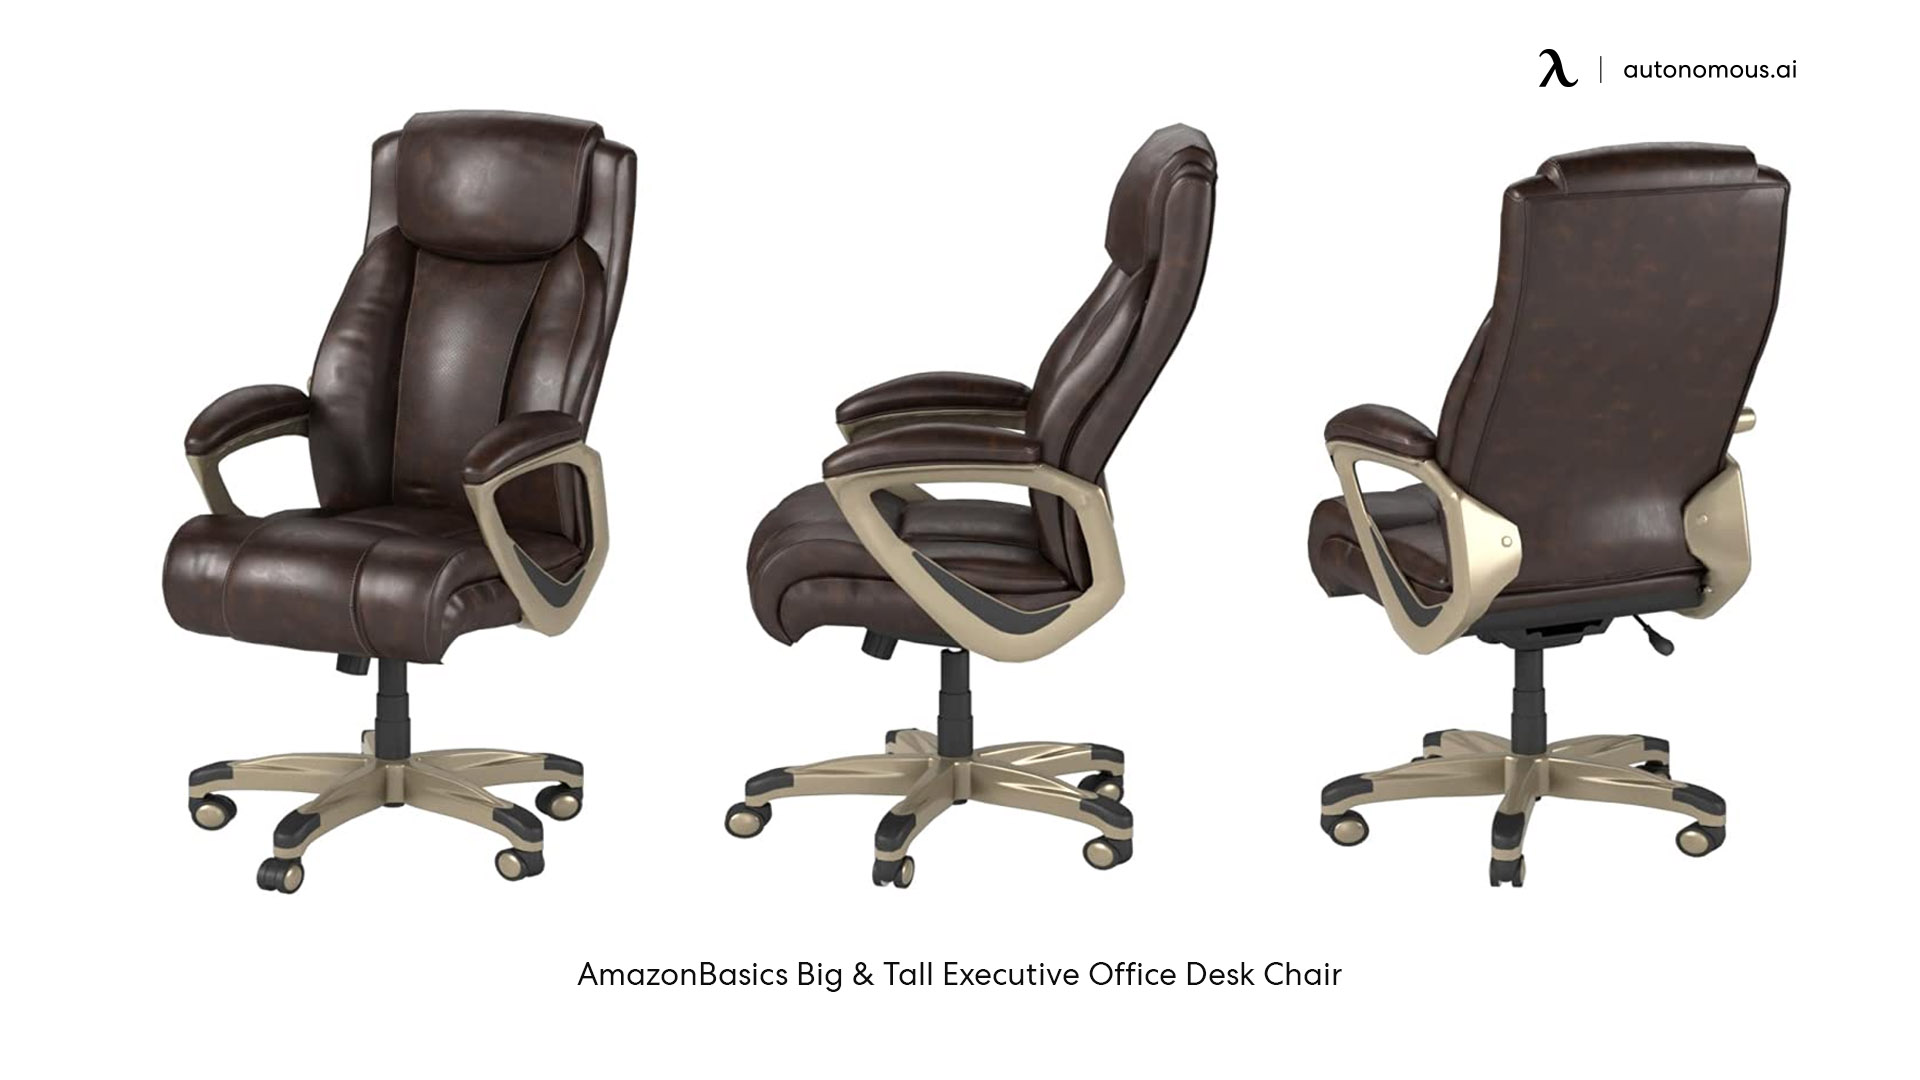 AmazonBasics Big & Tall affordable office chairs